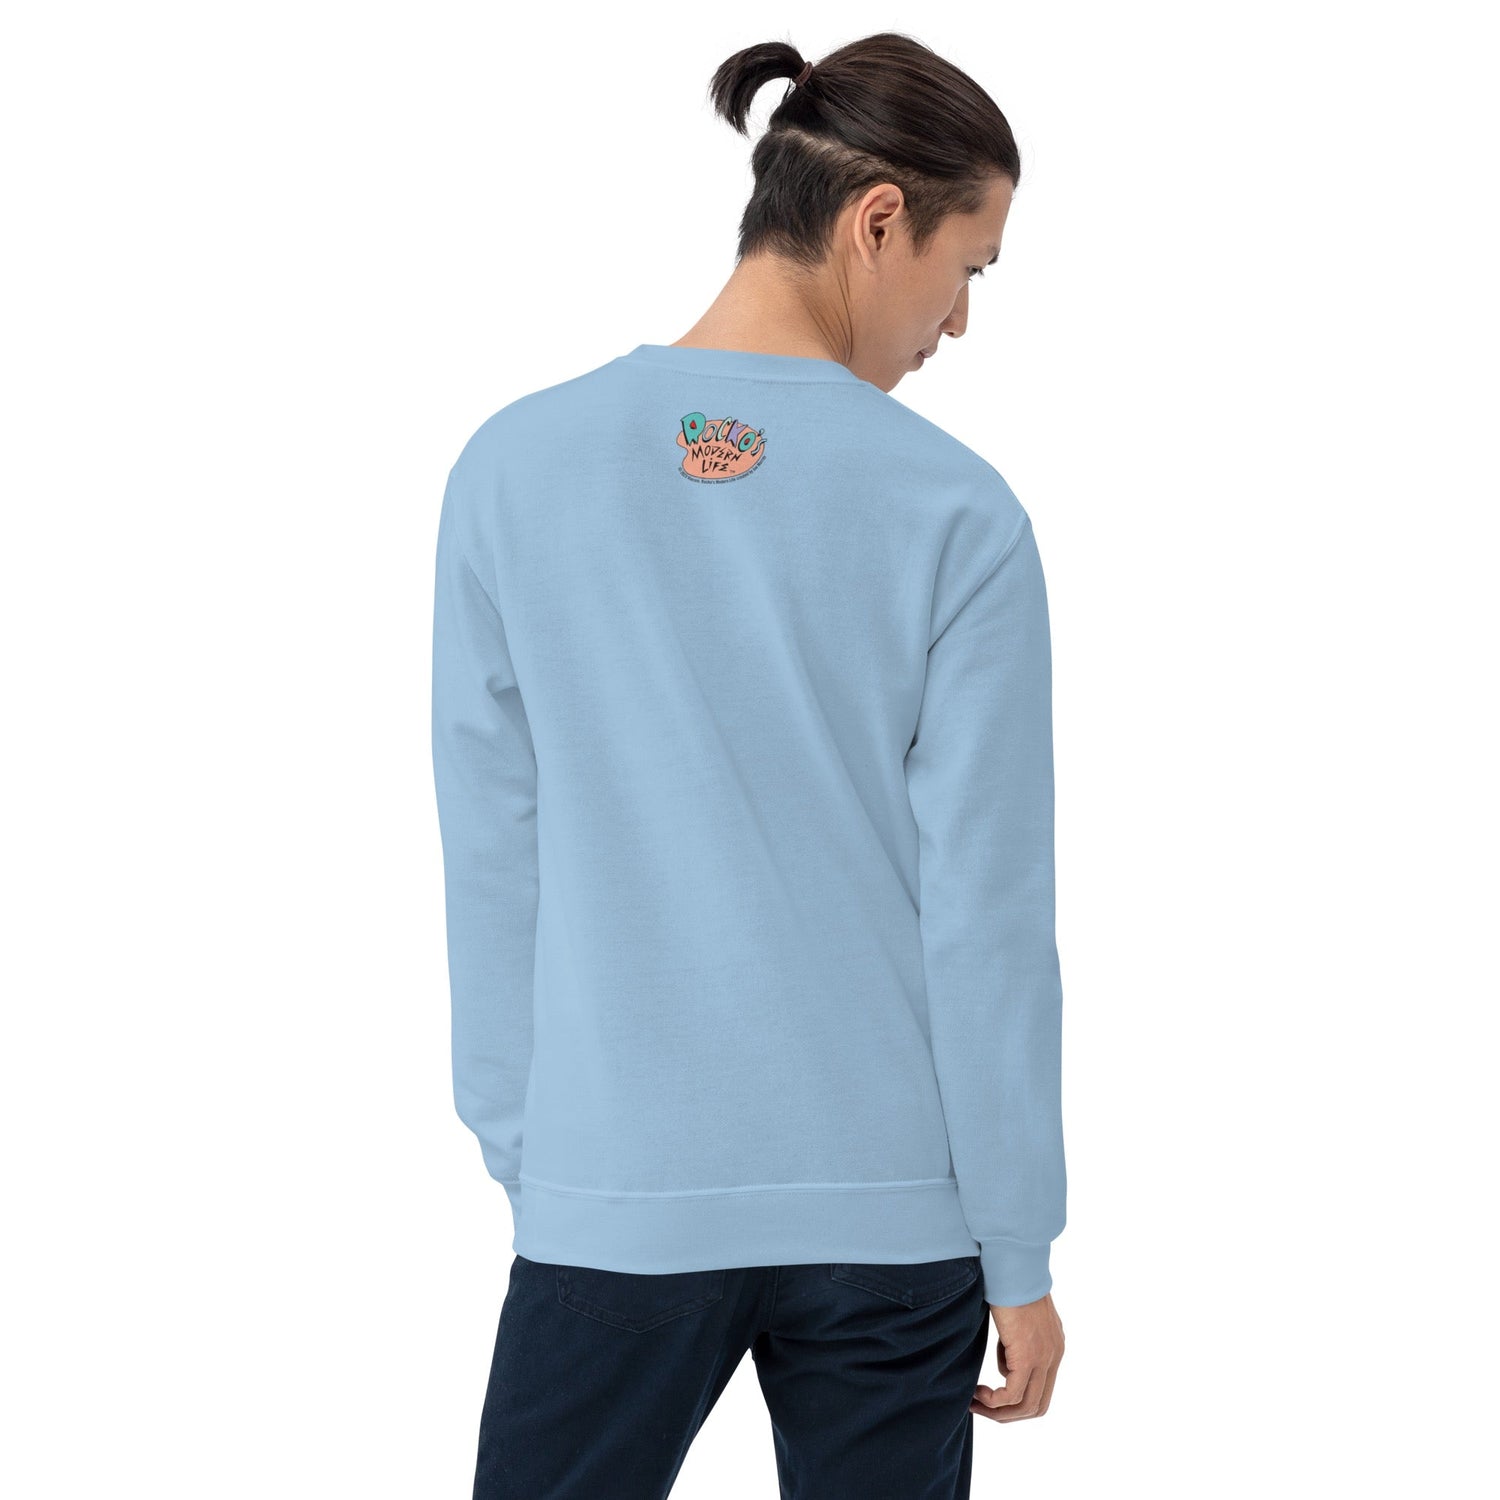 Rocko's Modern Life Logo Adult Crewneck Sweatshirt - Paramount Shop